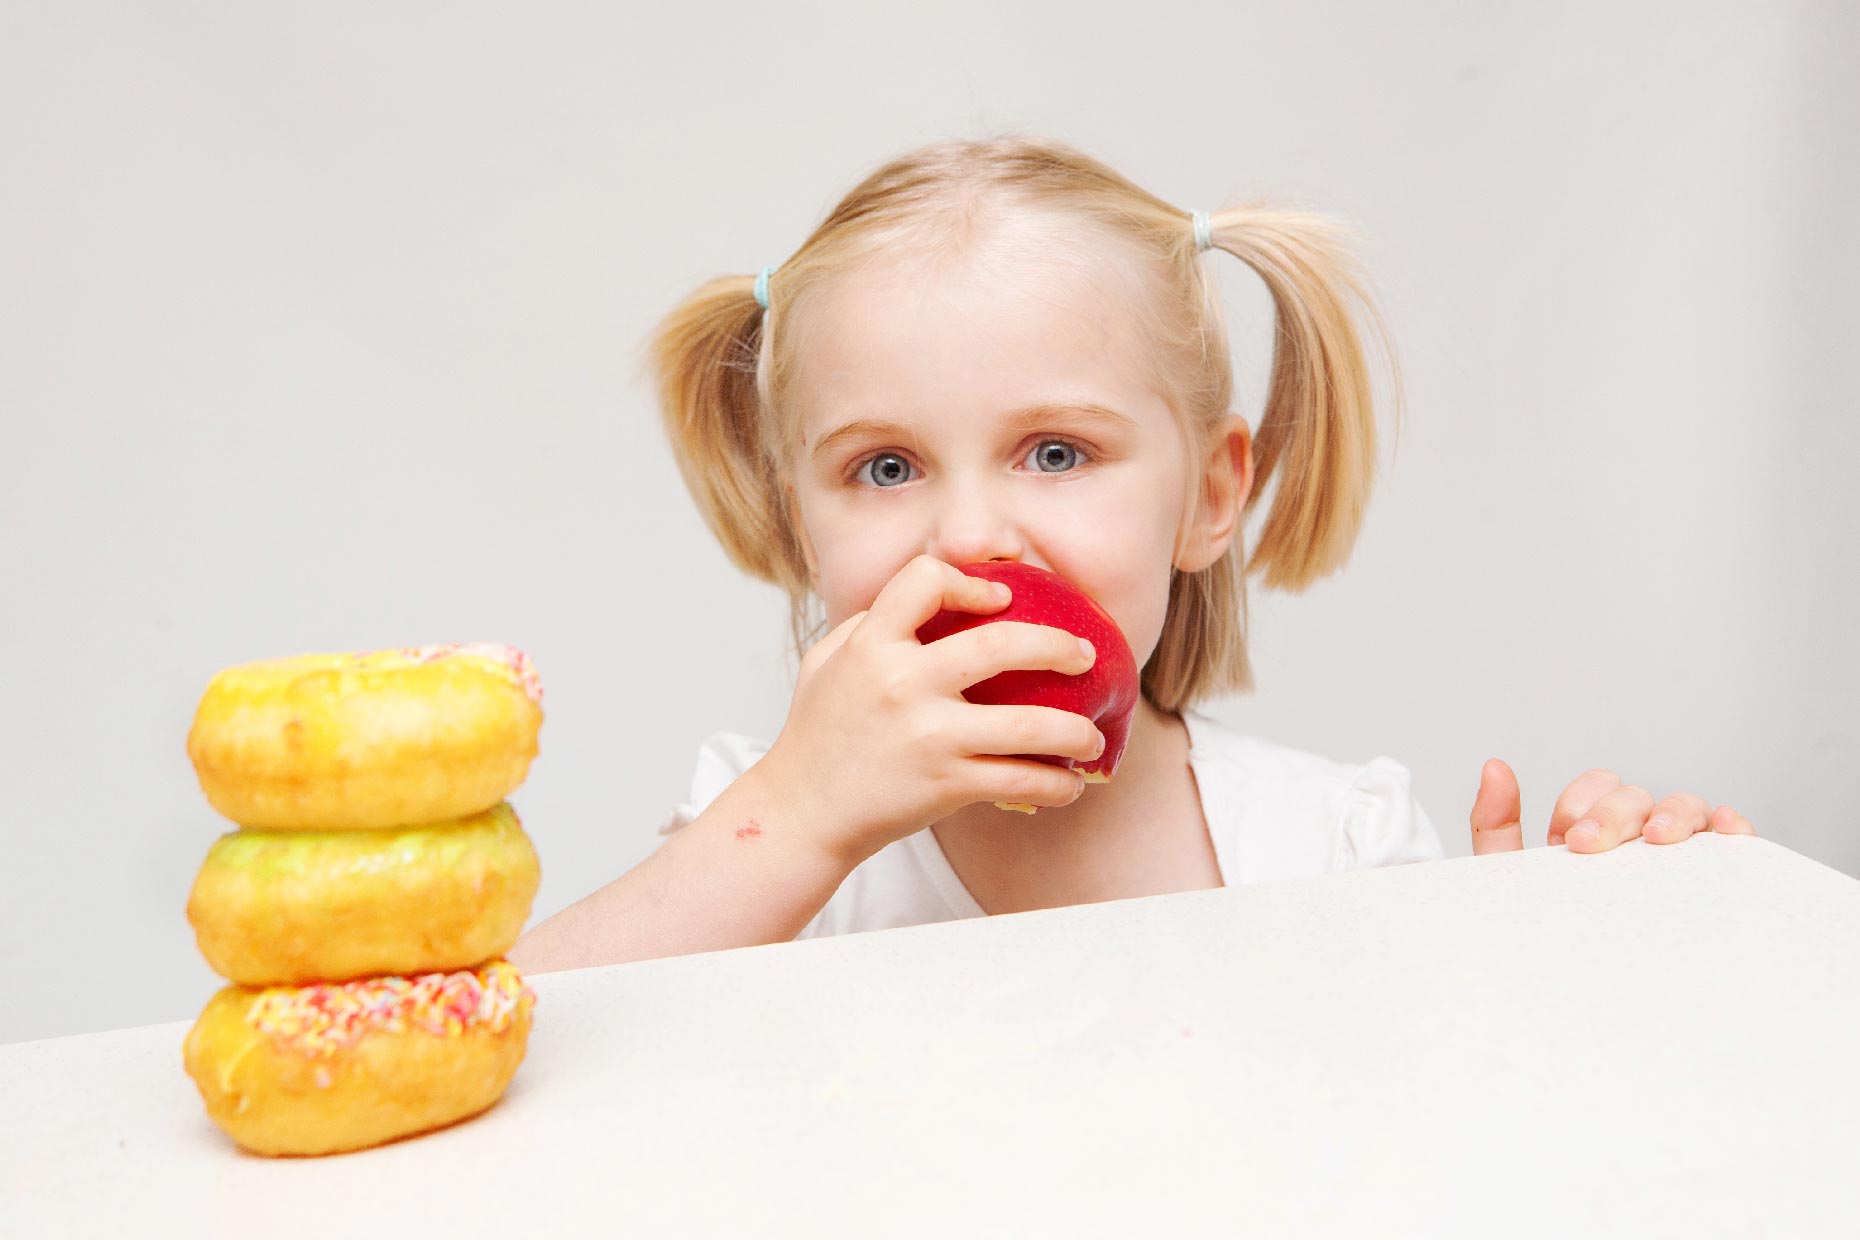 bambina mangia una mela e non le ciambelle